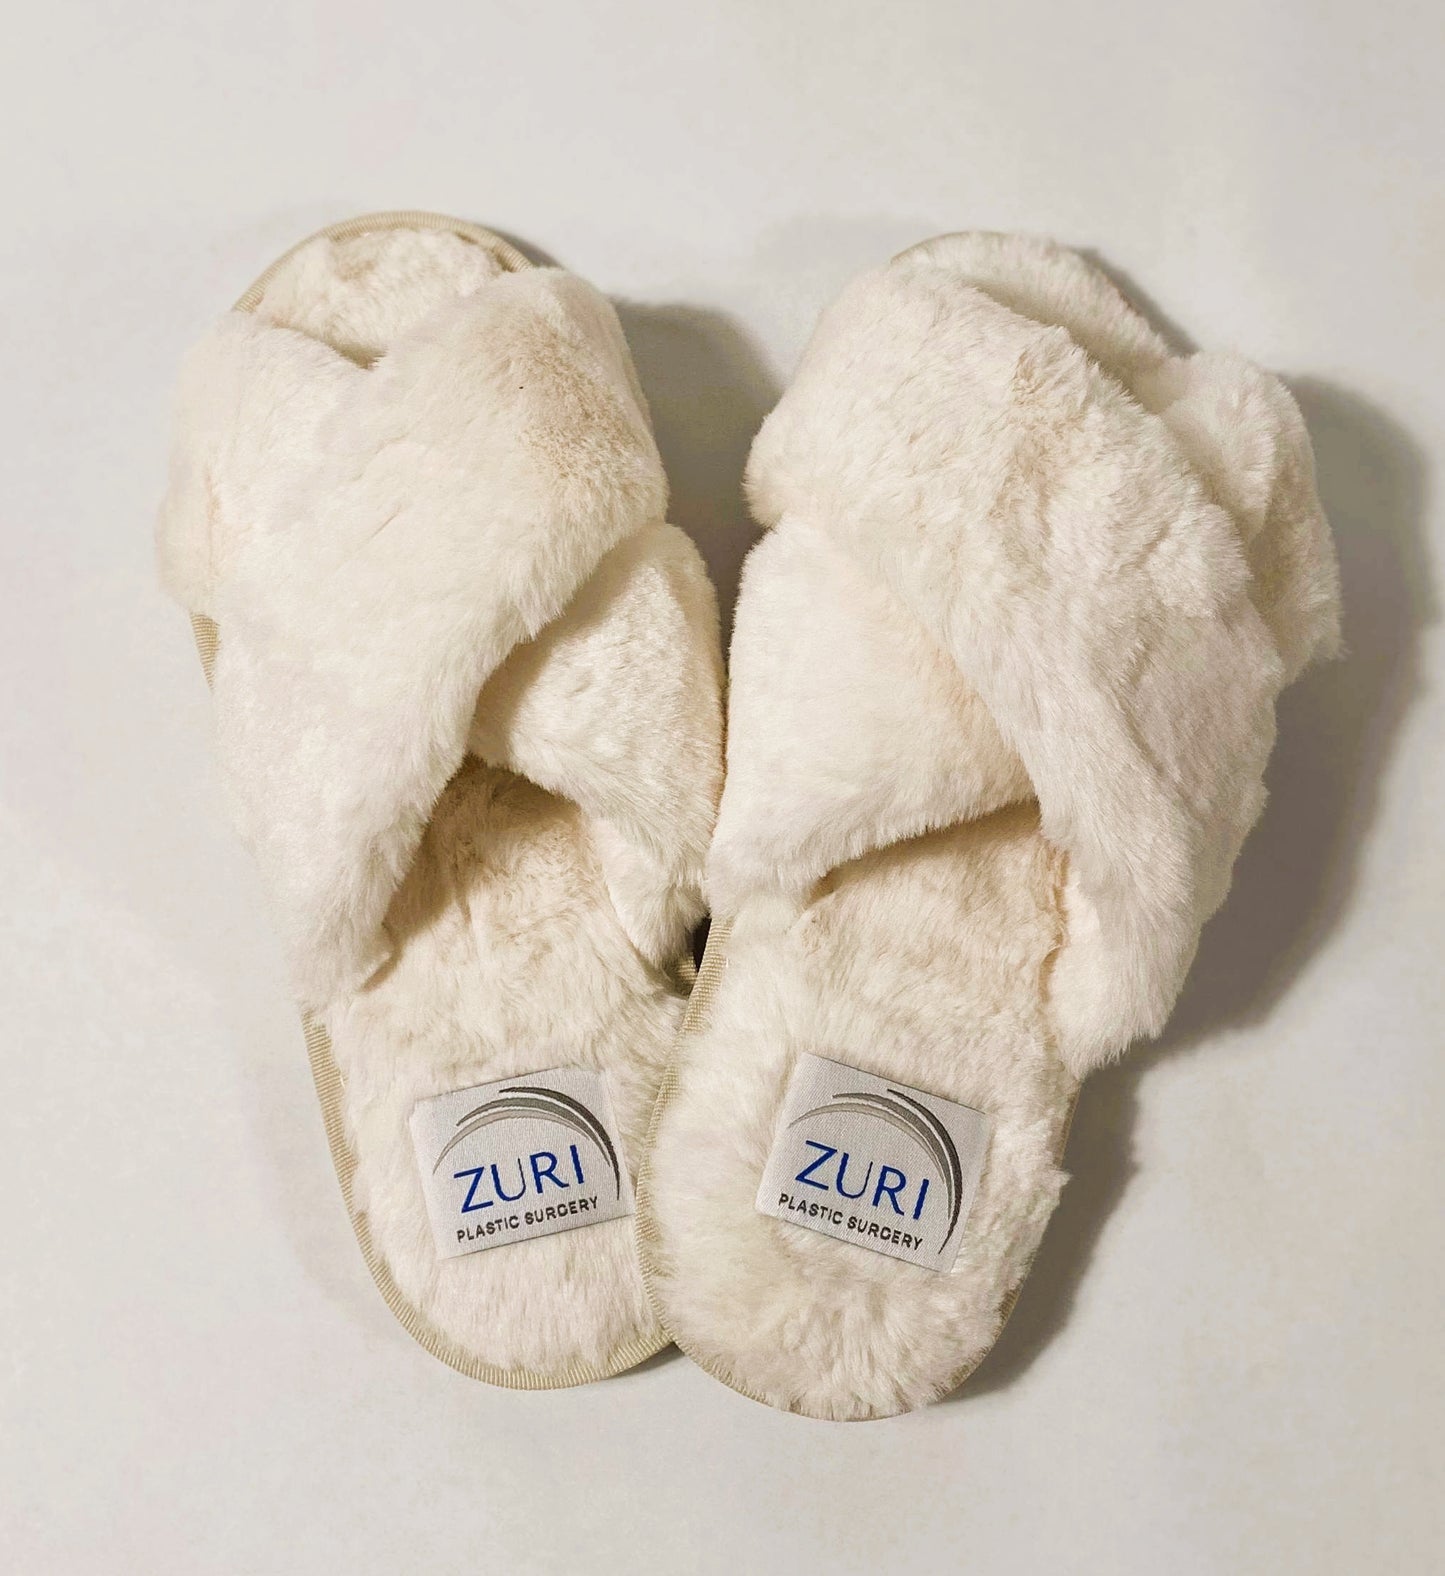 Zuri Plush Slippers